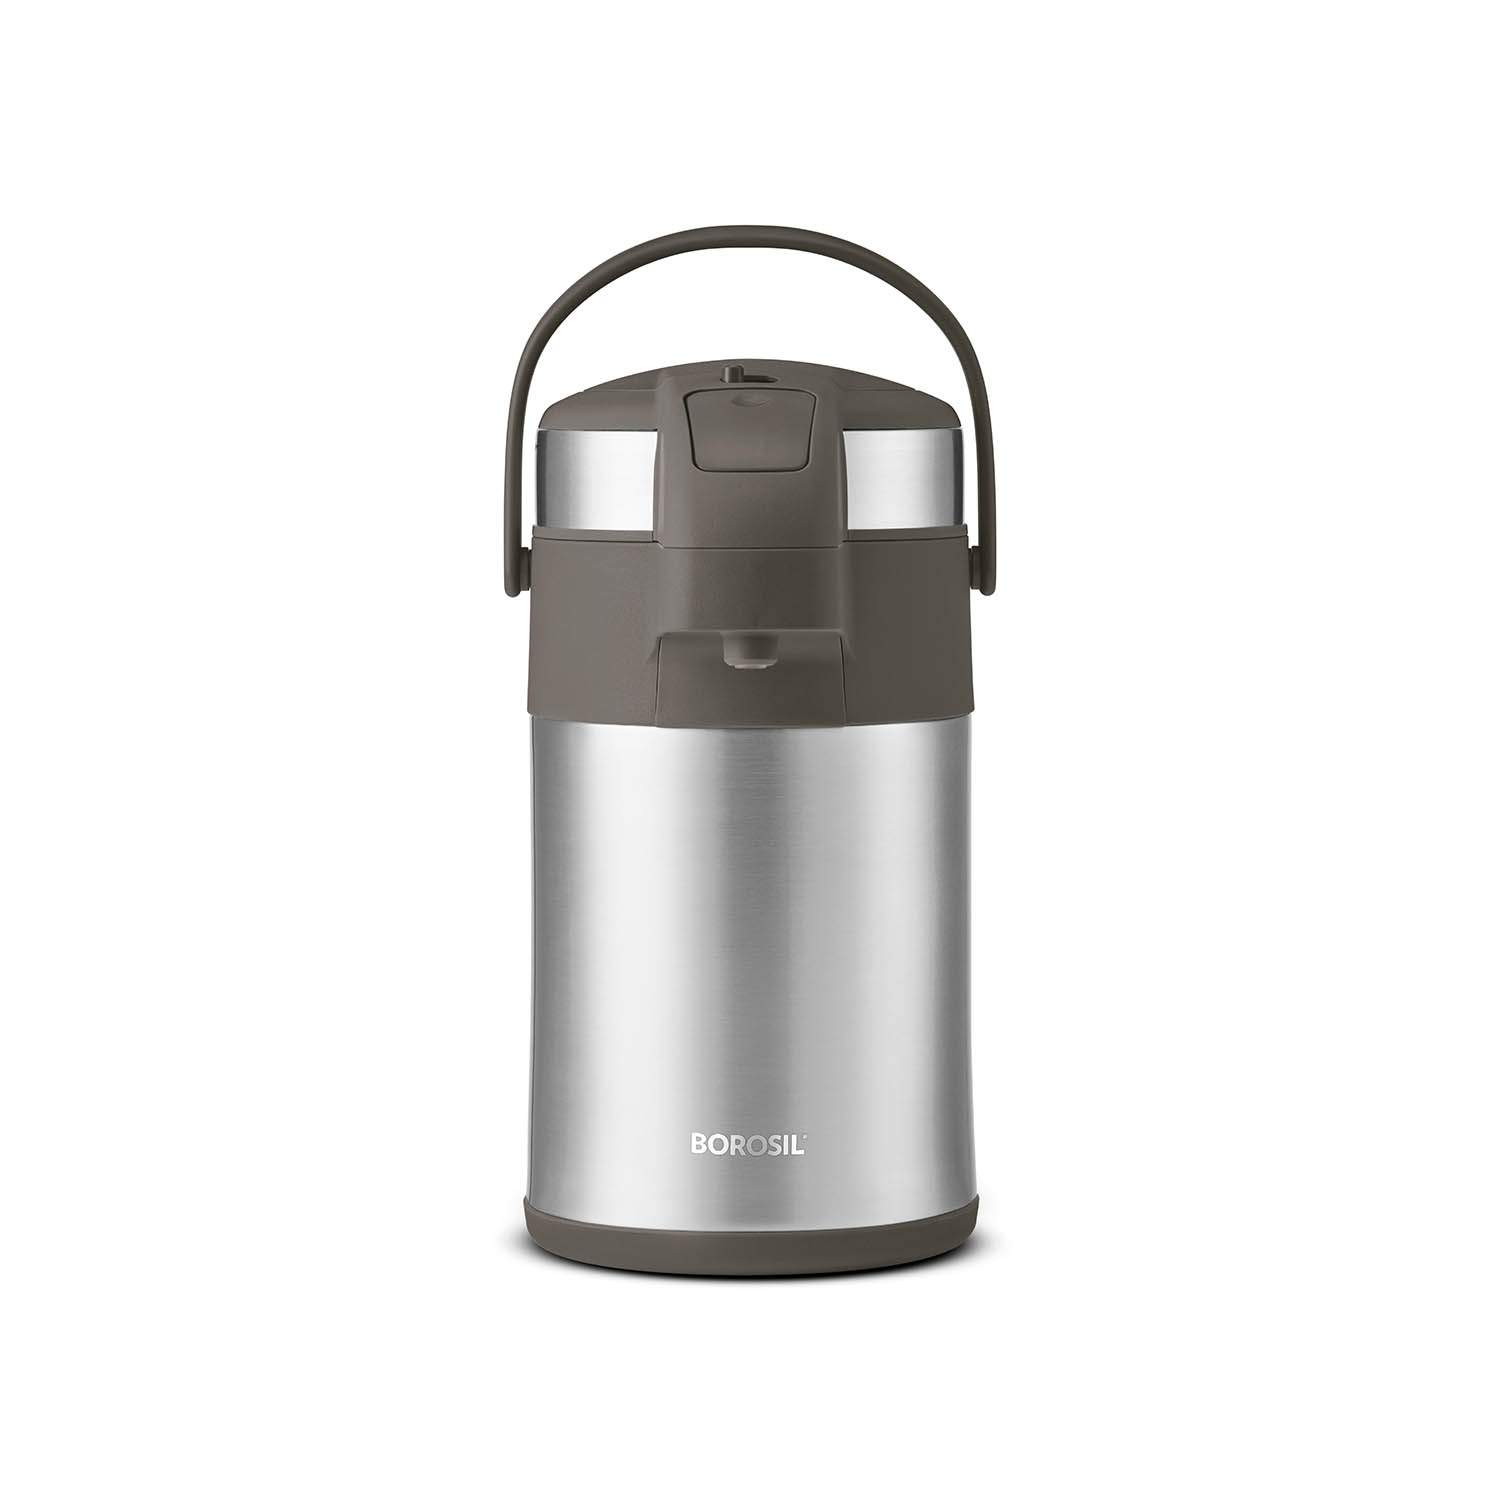 Borosil Airpot Flask - Stainless Steel - 3 Litre - BAP3000SS37